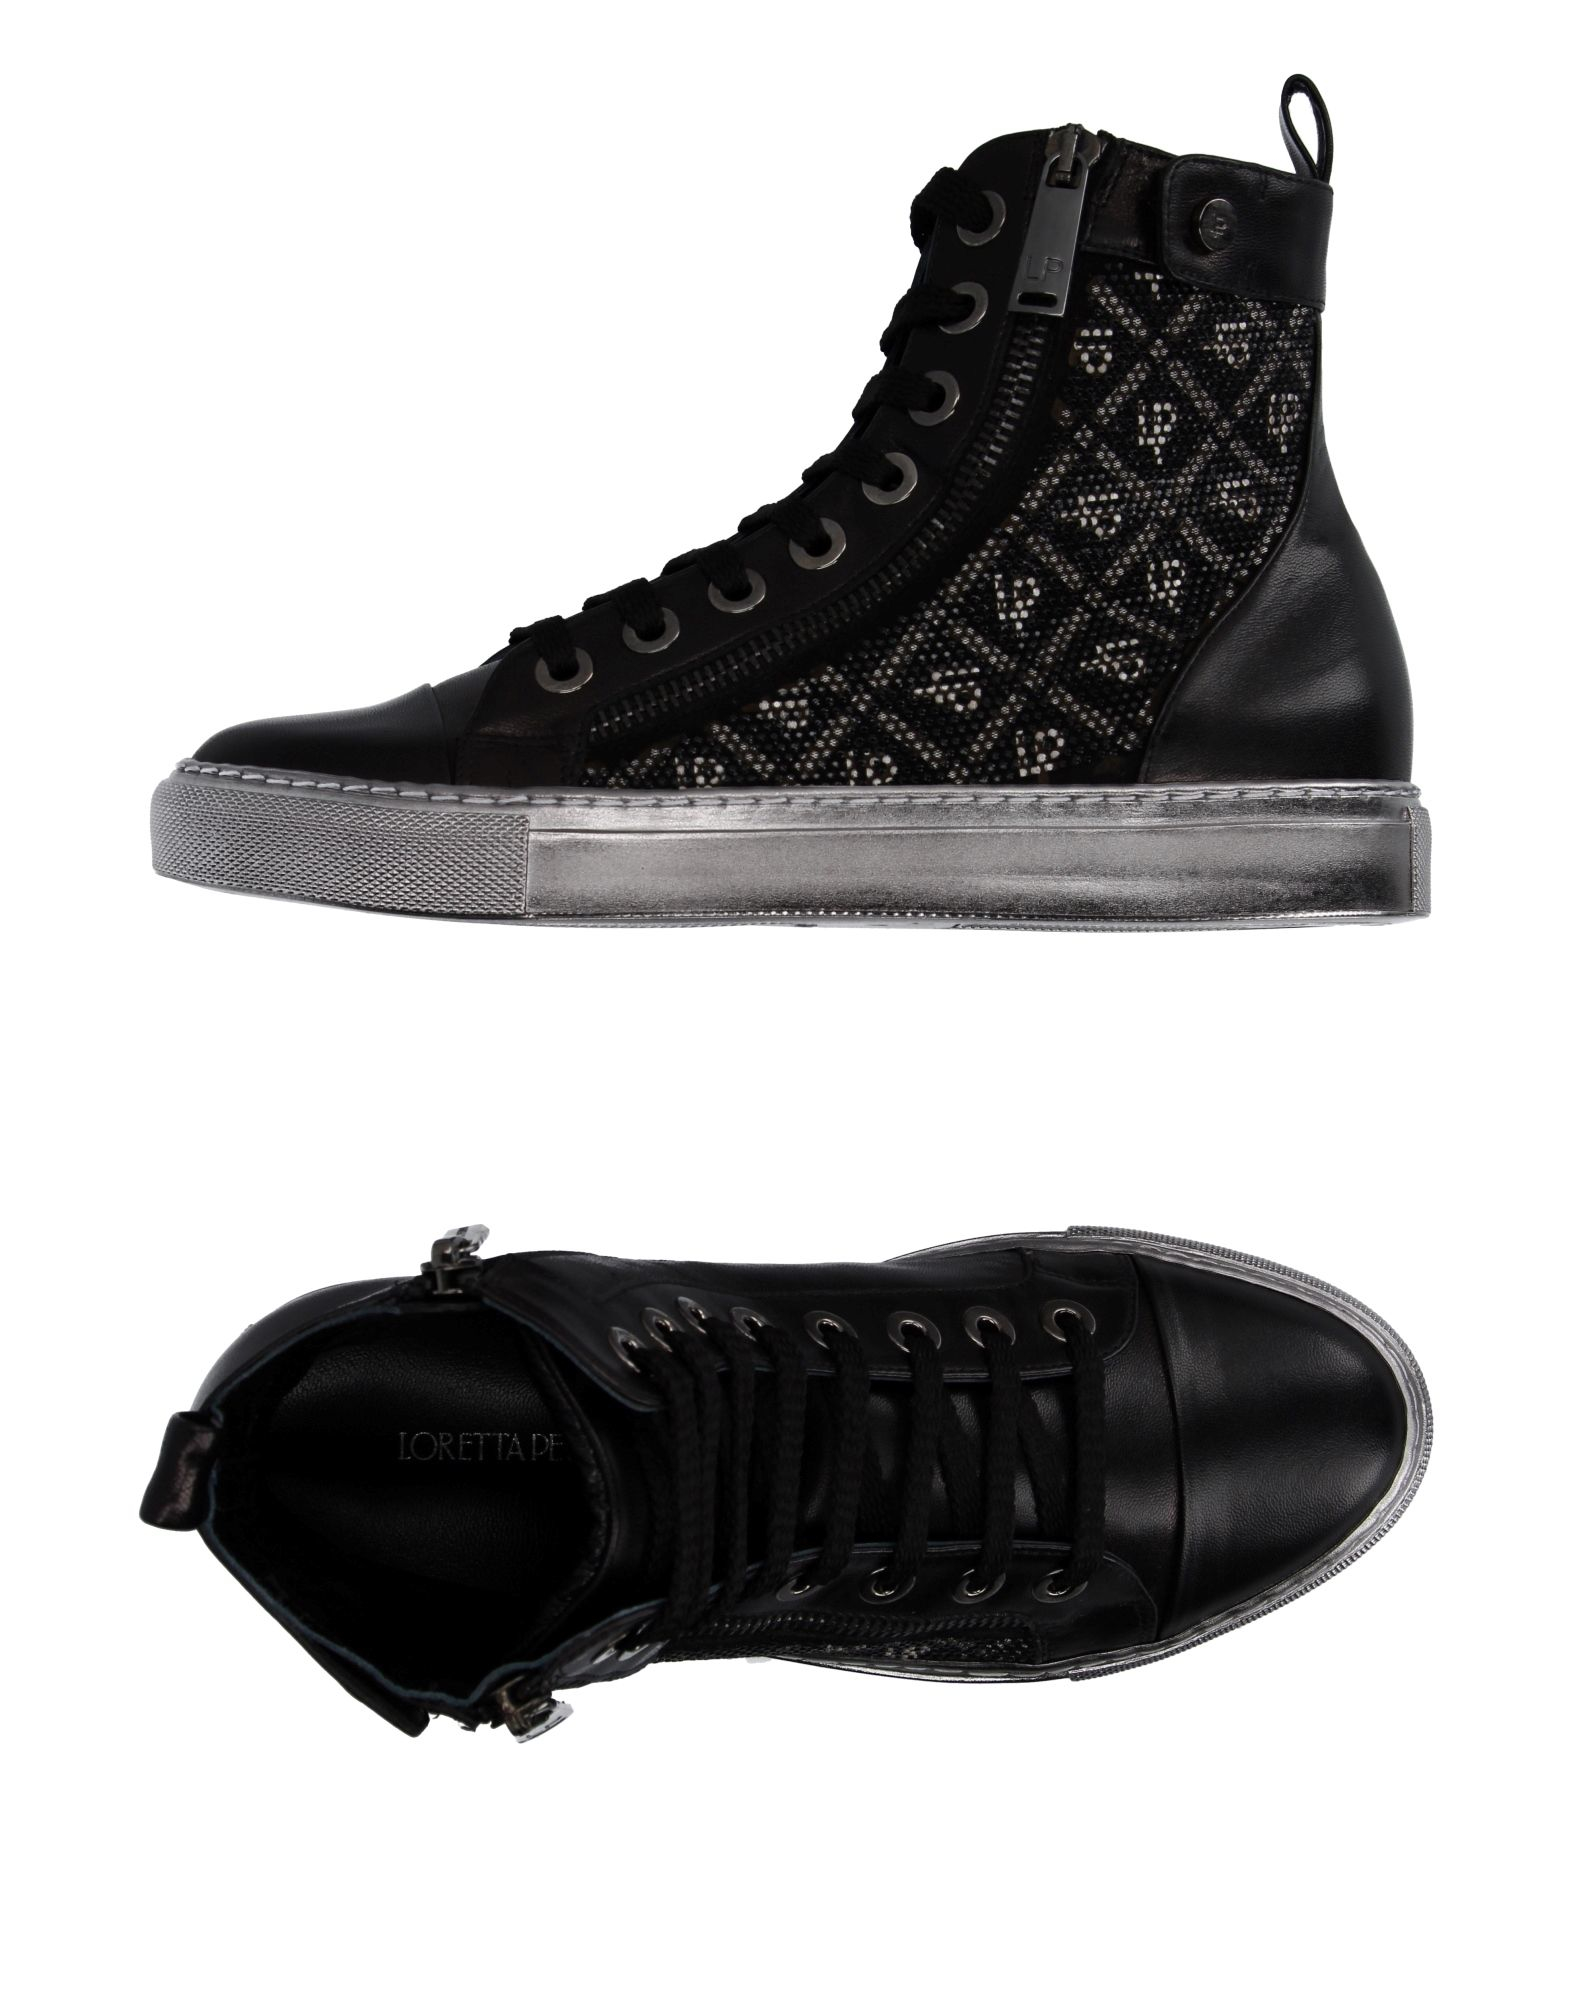 Loretta pettinari High-tops & Sneakers in Black | Lyst